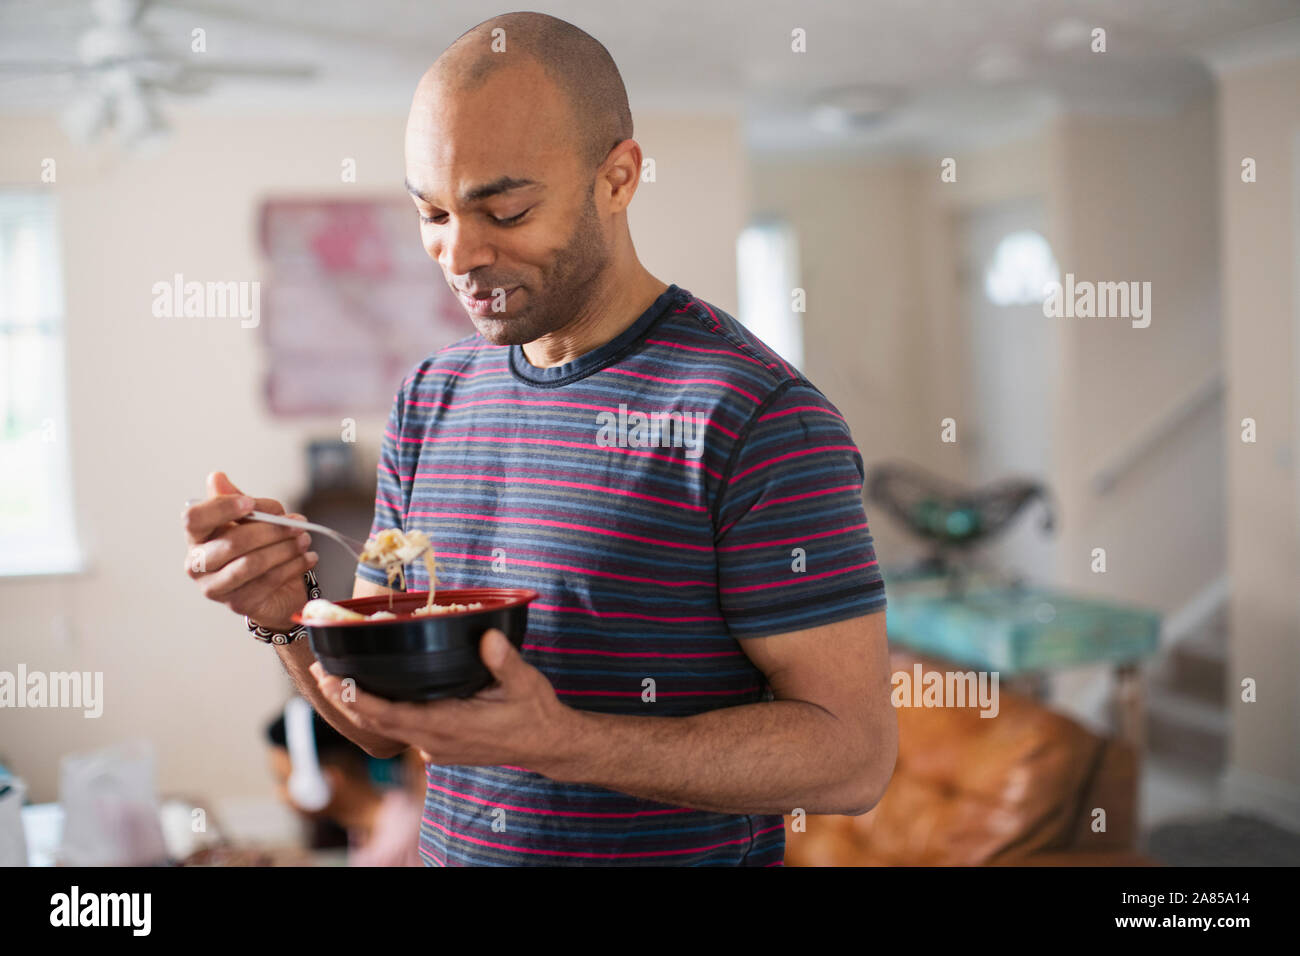 Man eating at home Stock Photo